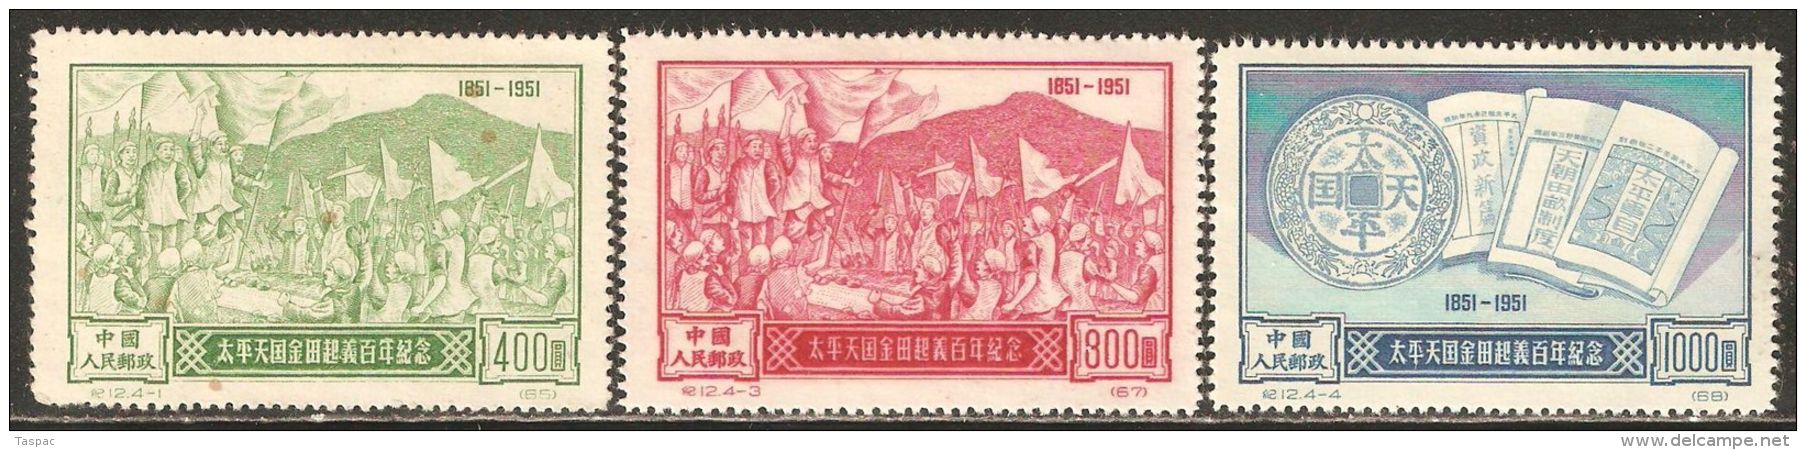 China P.R. 1951 Mi# 129-130, 132 II (*) Mint No Gum, Hinged - Reprints - Short Set - Cent. Of Taiping Peasant Rebell - Official Reprints